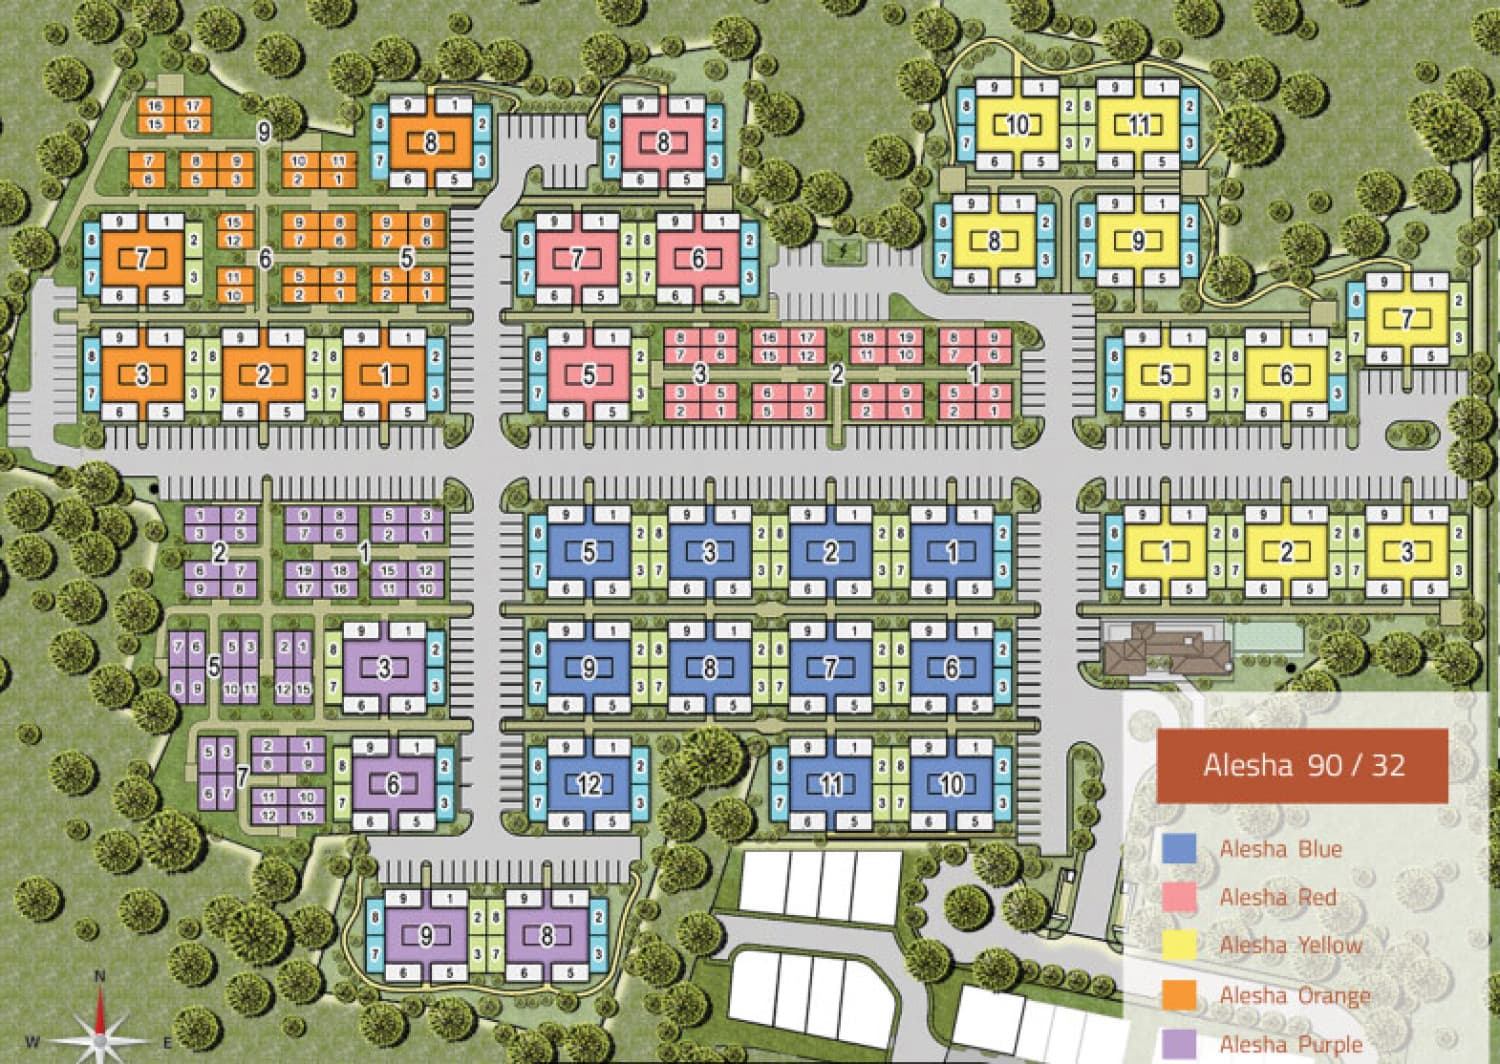 Siteplan New Alesha House BSD City